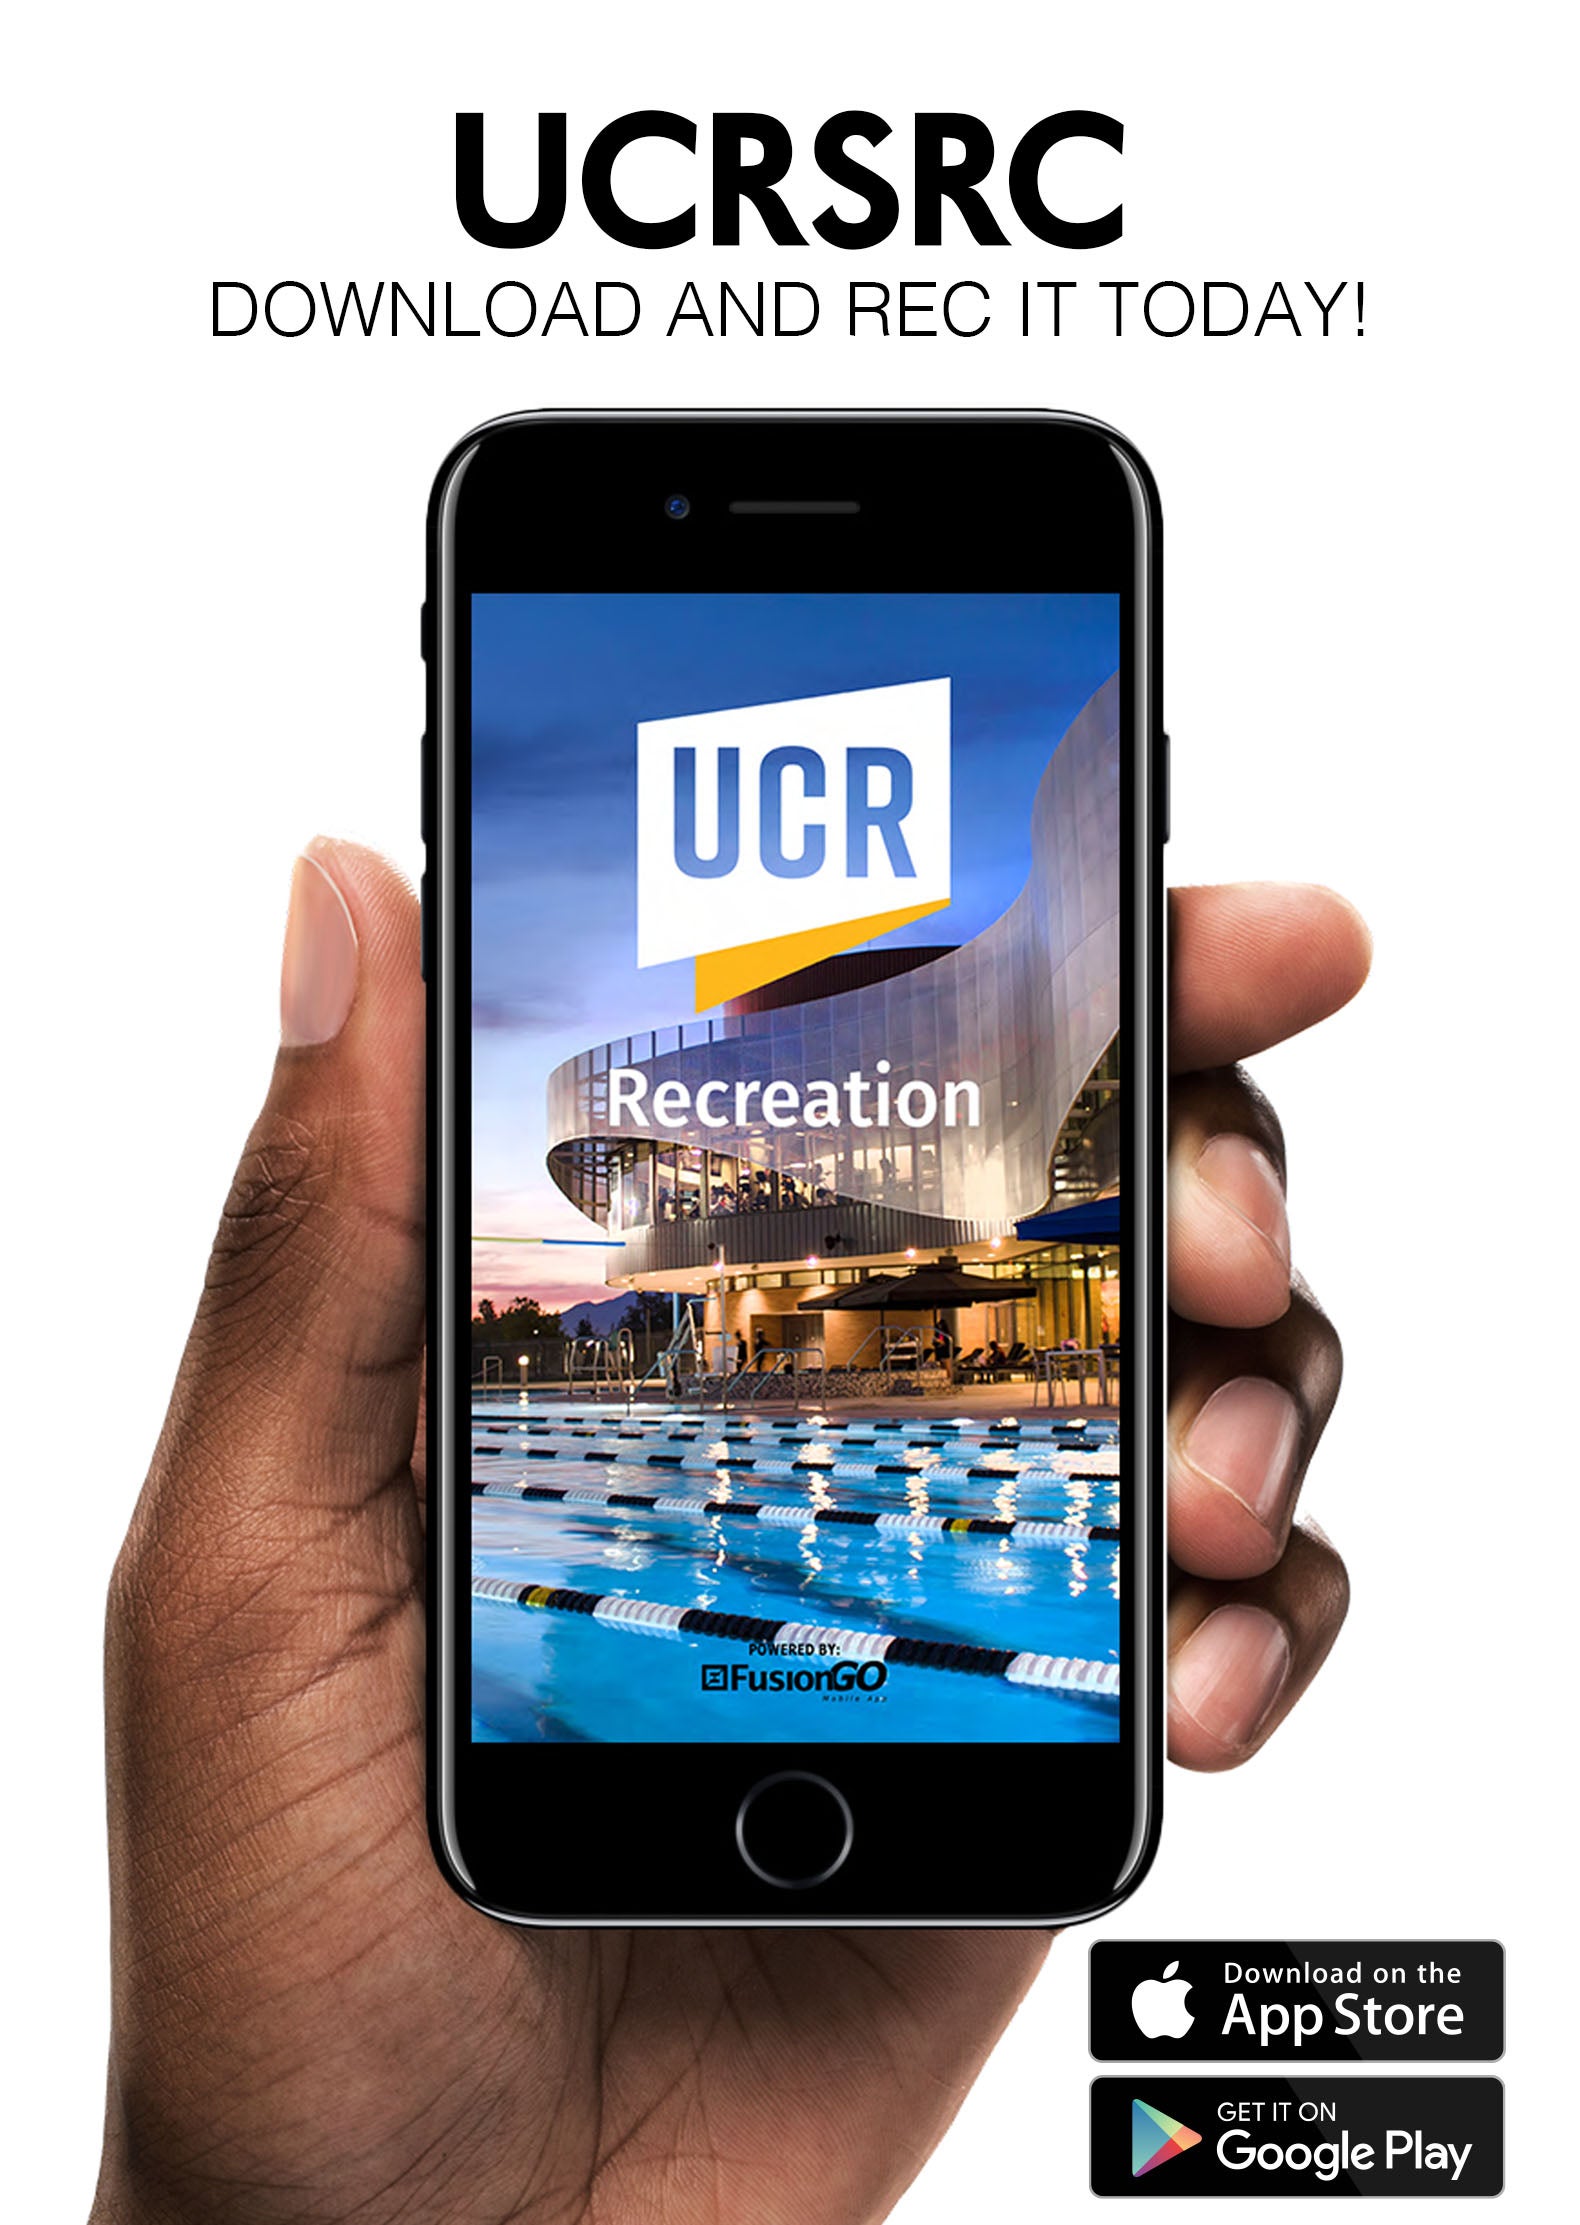 UCRSRC App